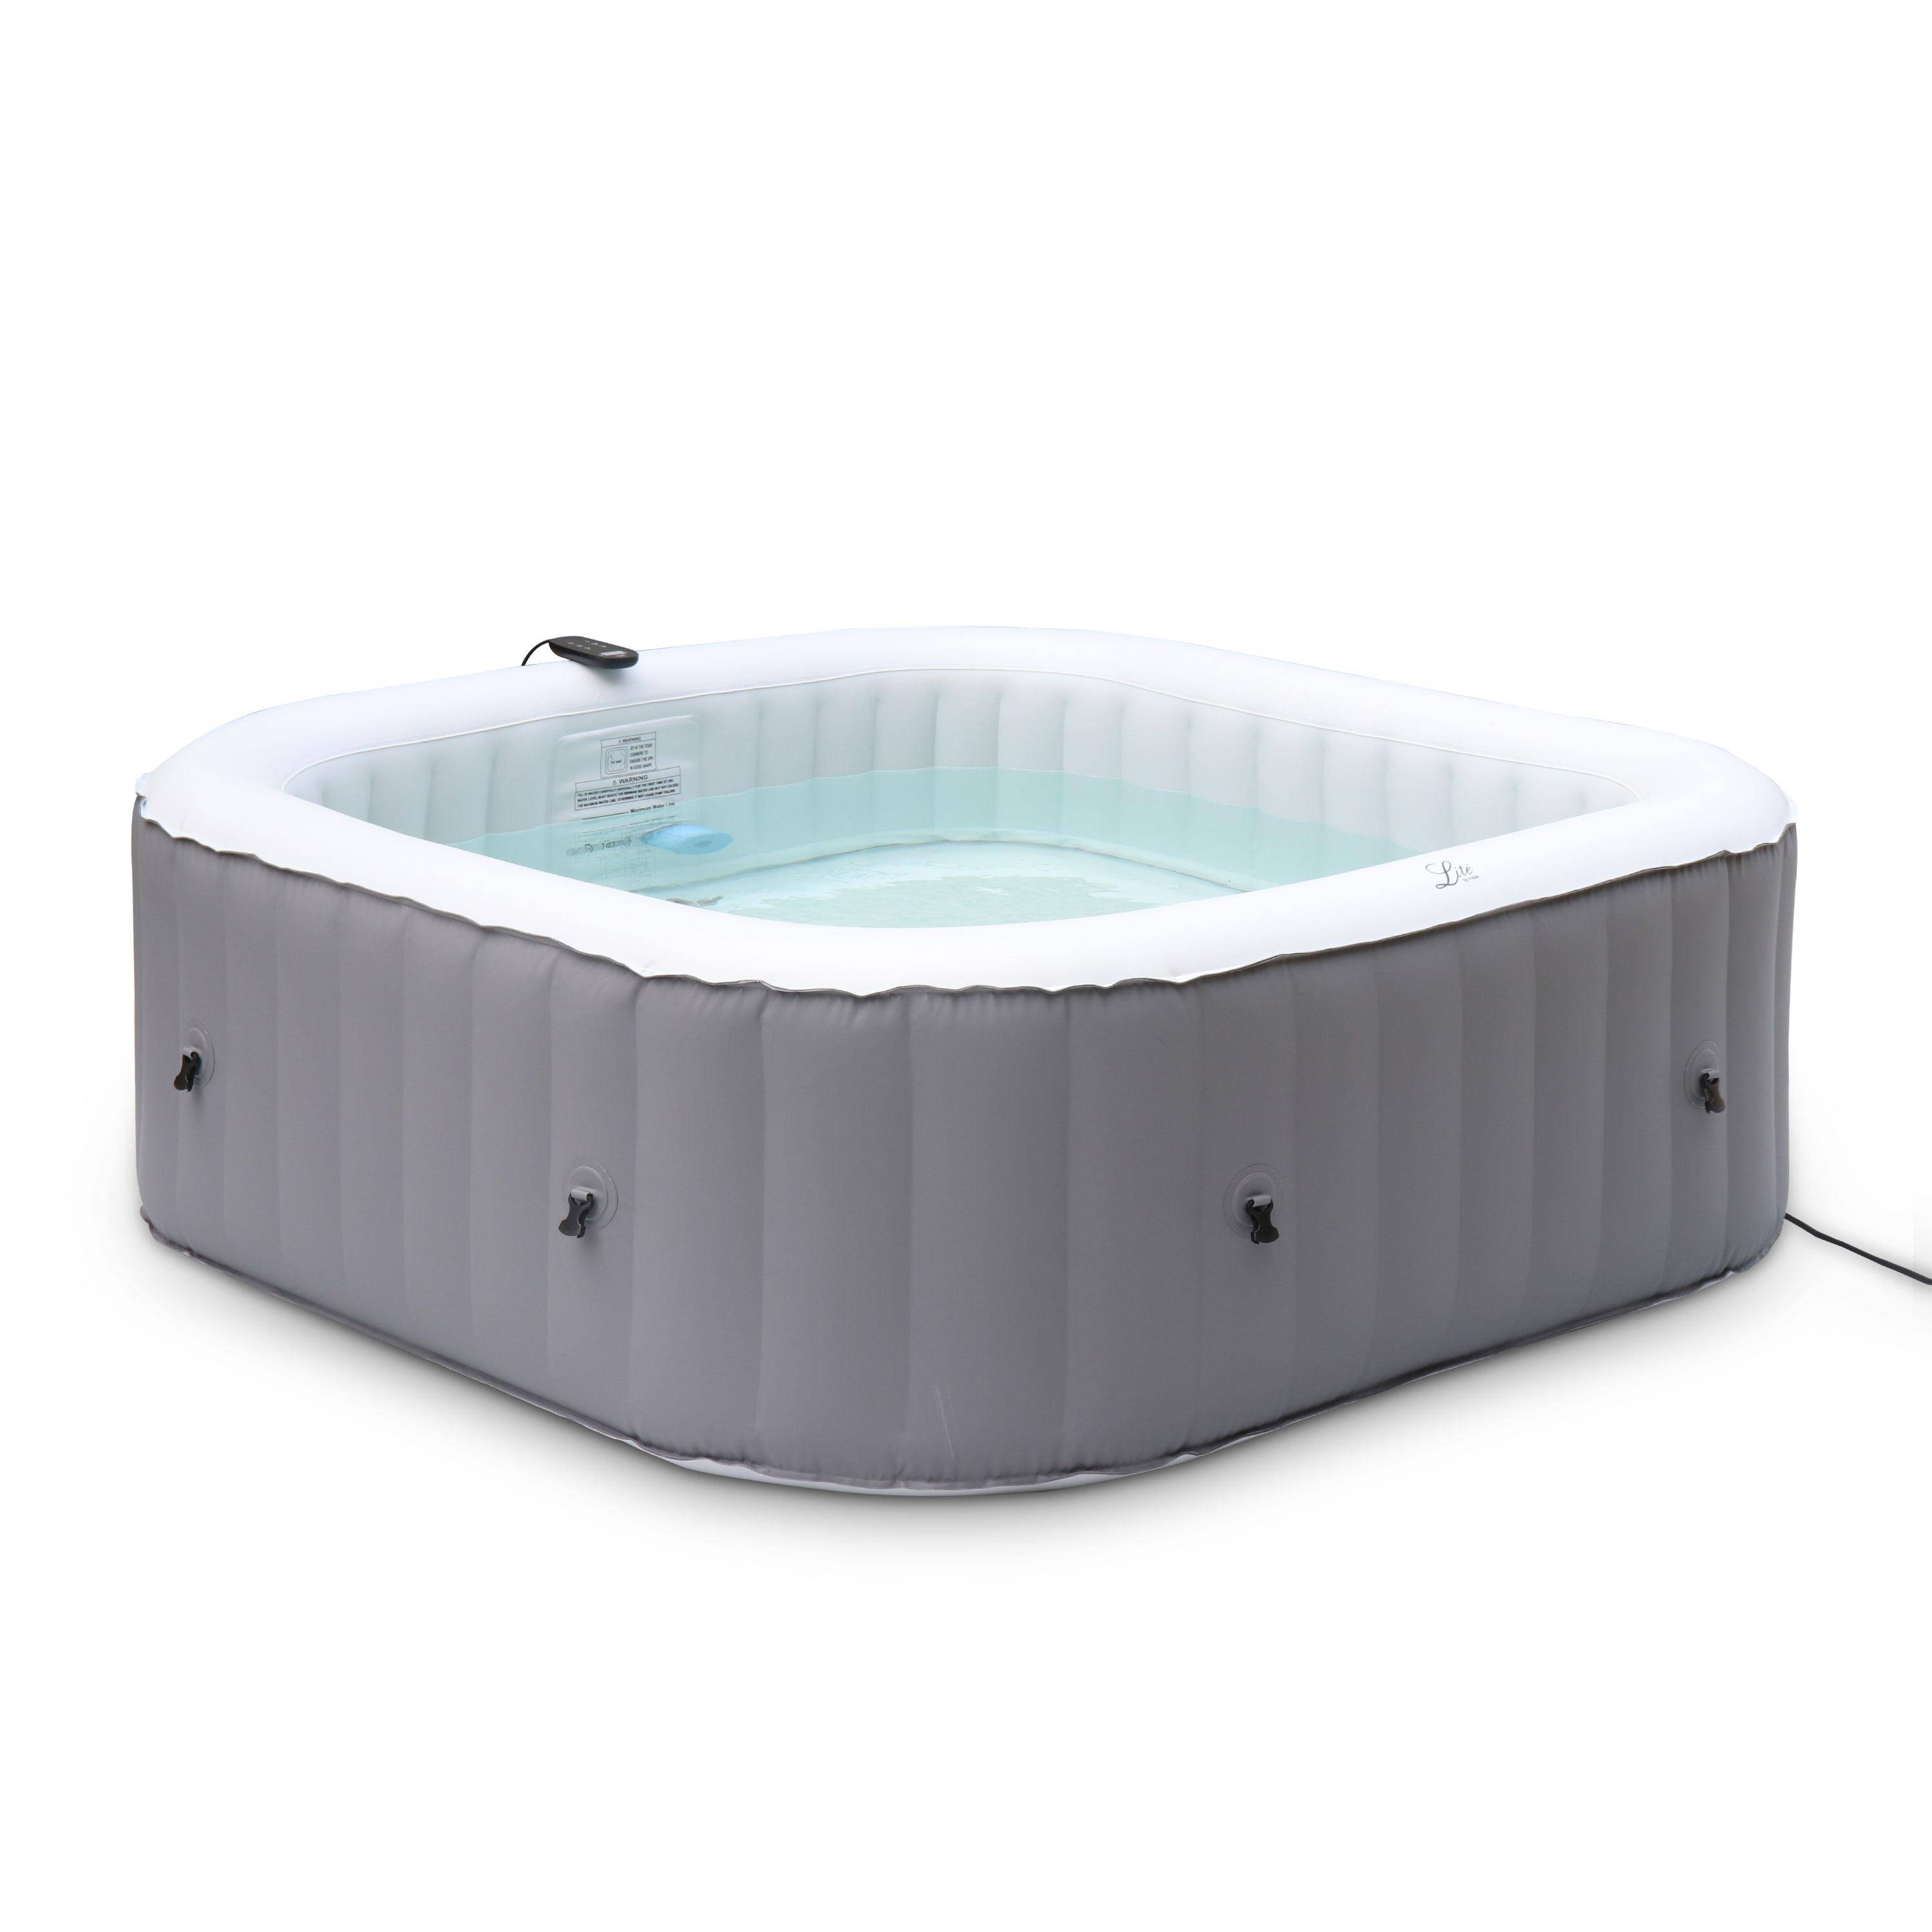 6-person square inflatable hot tub MSpa - 185cm square 6-person spa, PVC, pump, heater, filter, remote control - Fjord 6 - Grey,sweeek,Photo1